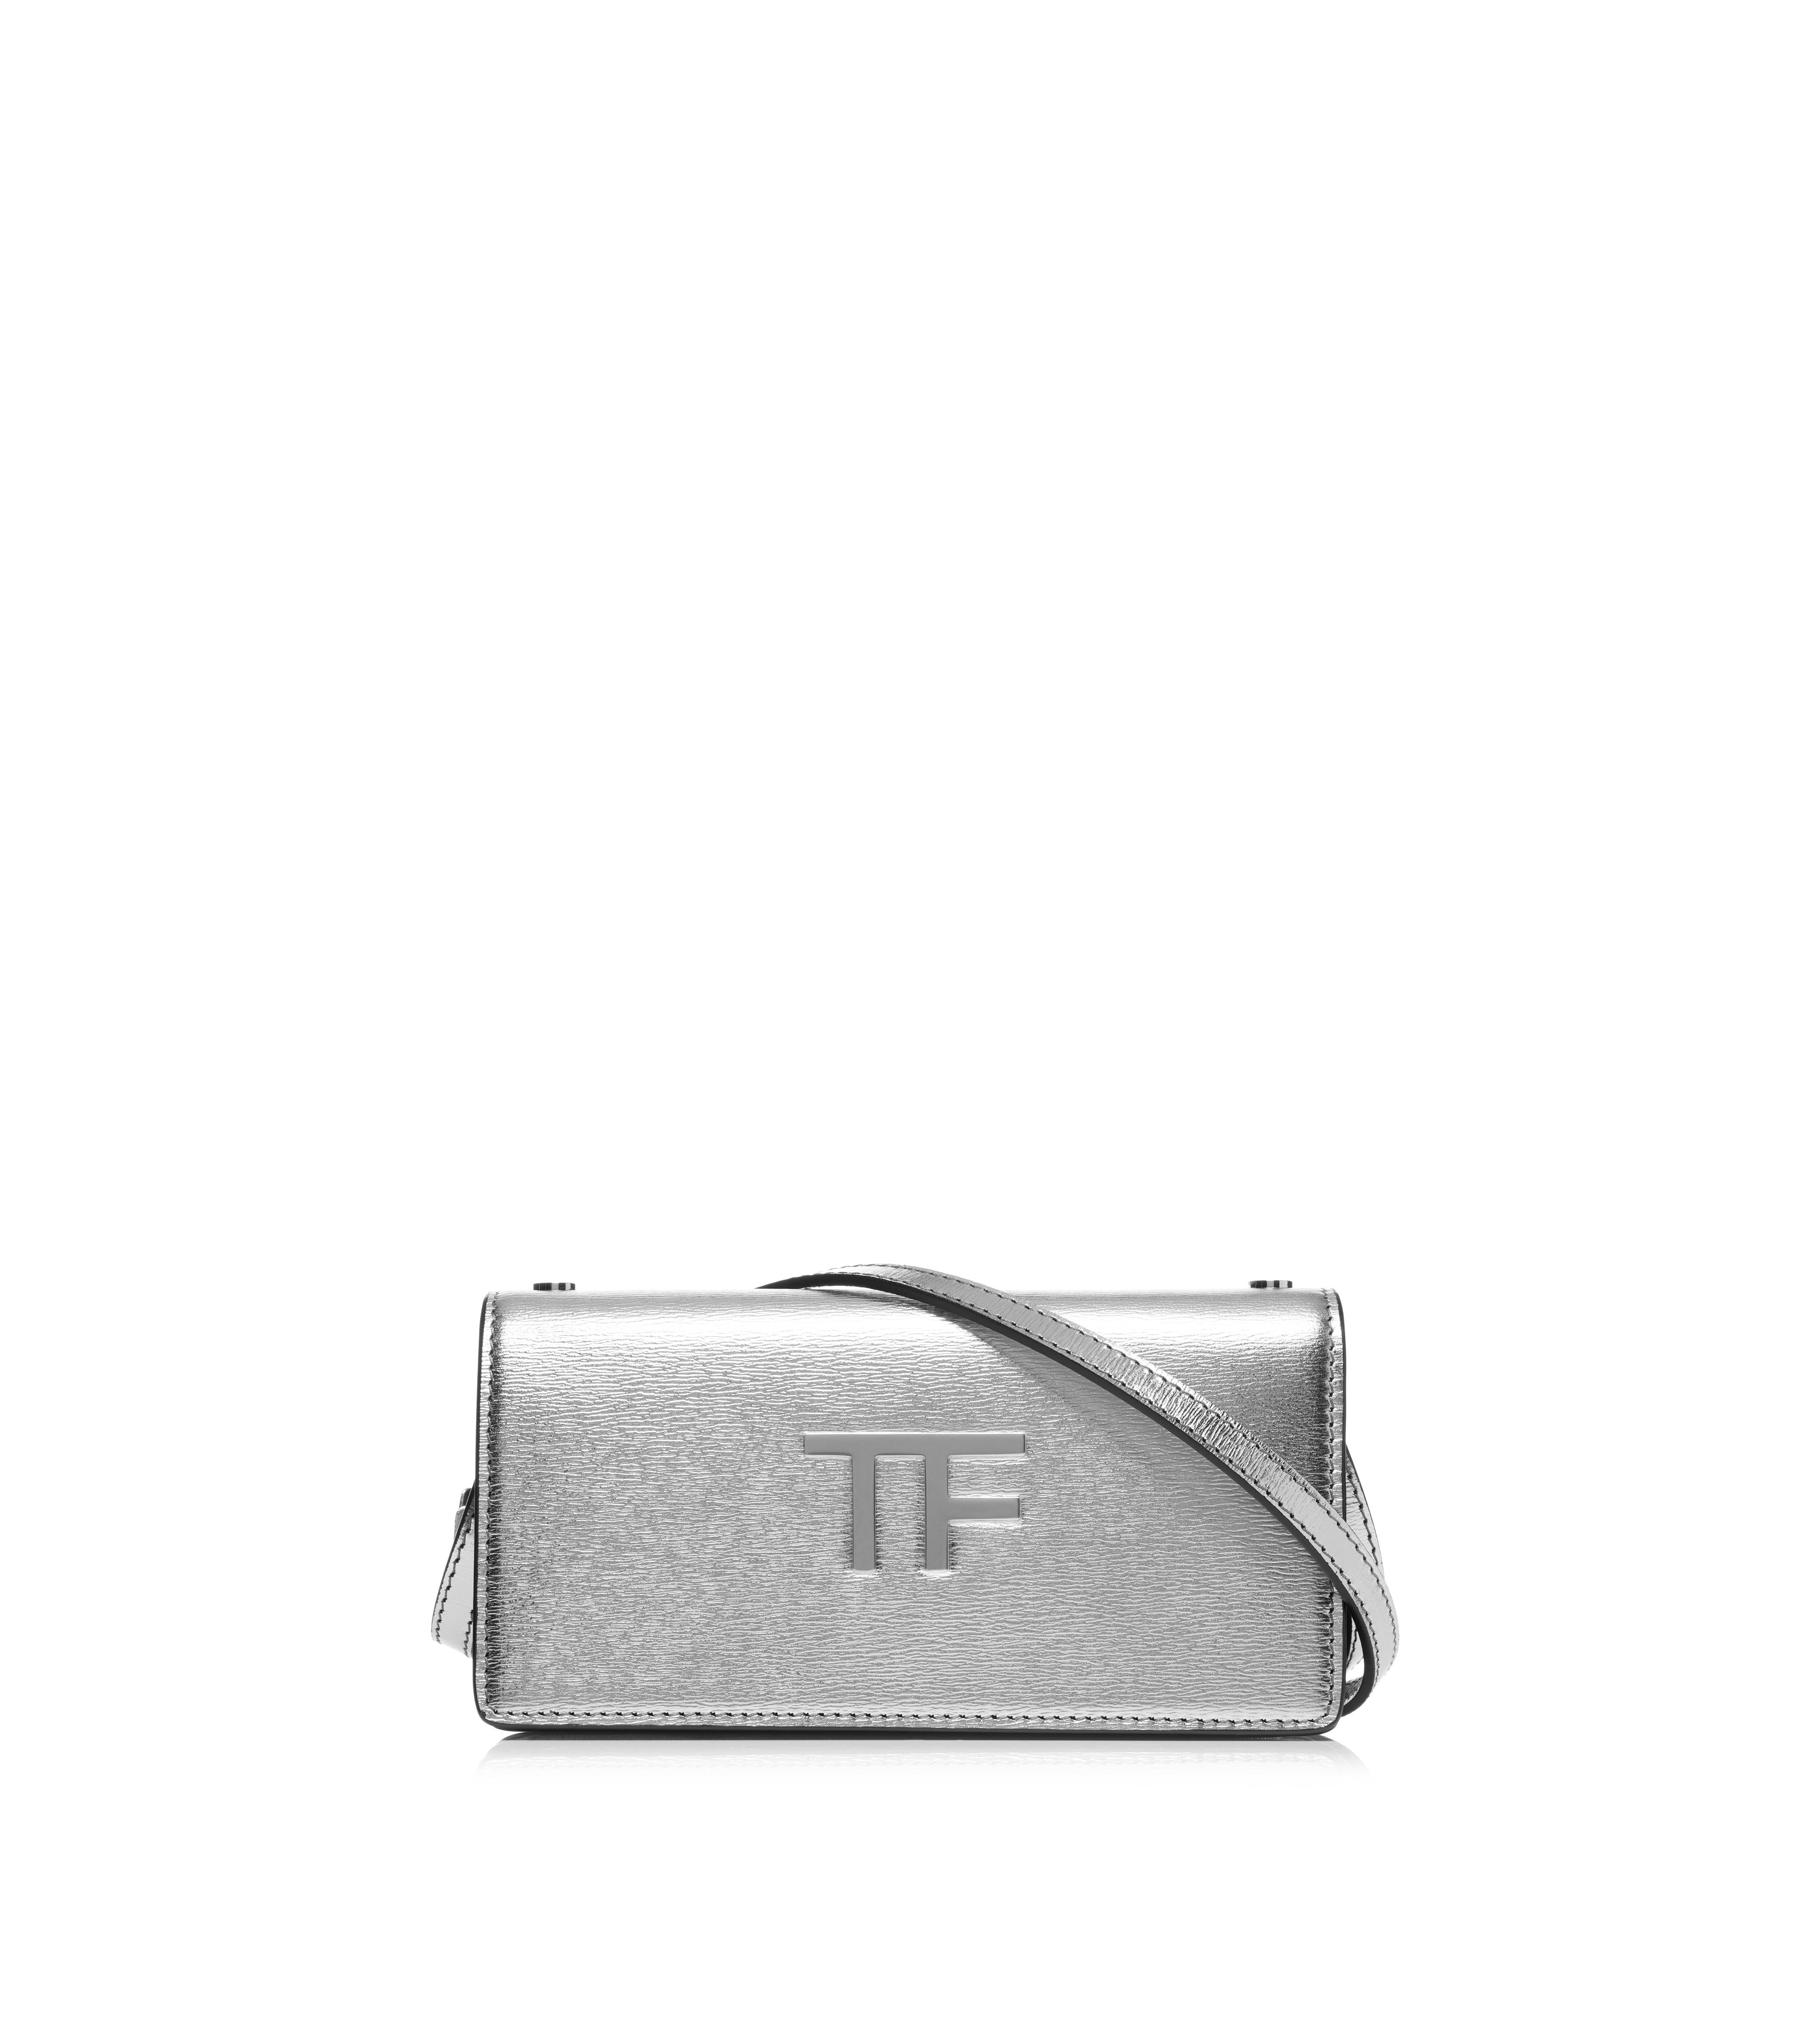 Tom Ford Neoprene Clutch Bag - Blue Clutches, Handbags - TOM132955